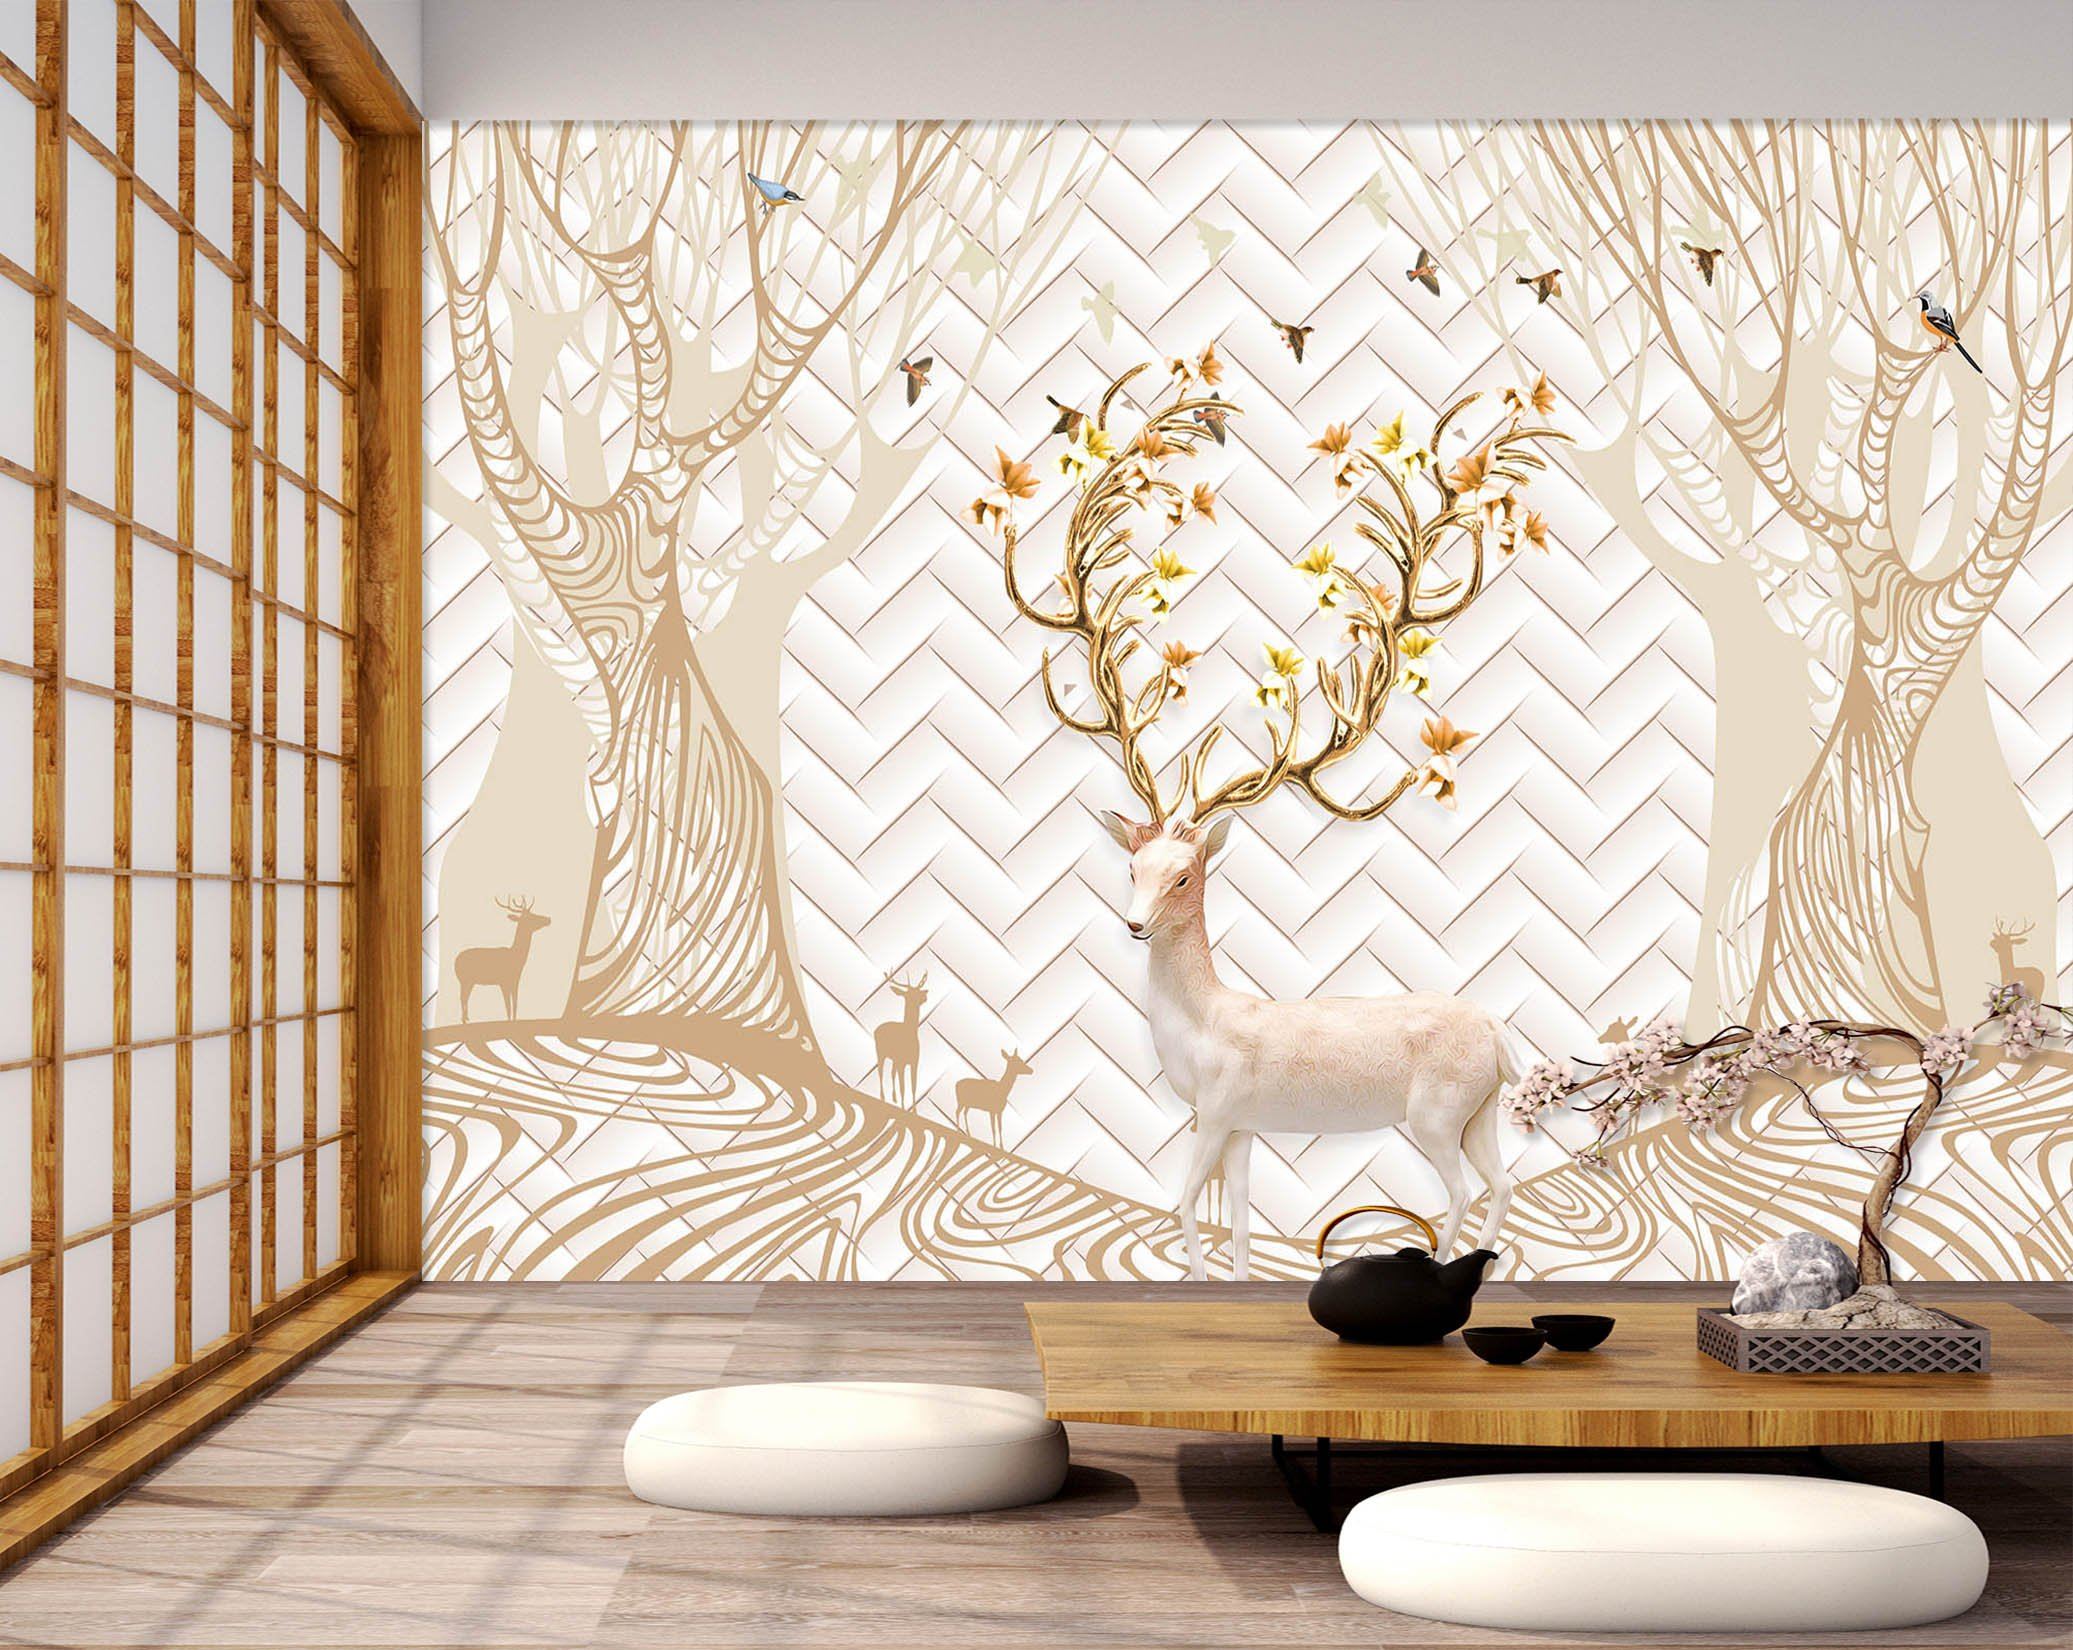 3D Golden Deer Angle 497 Wallpaper AJ Wallpaper 2 